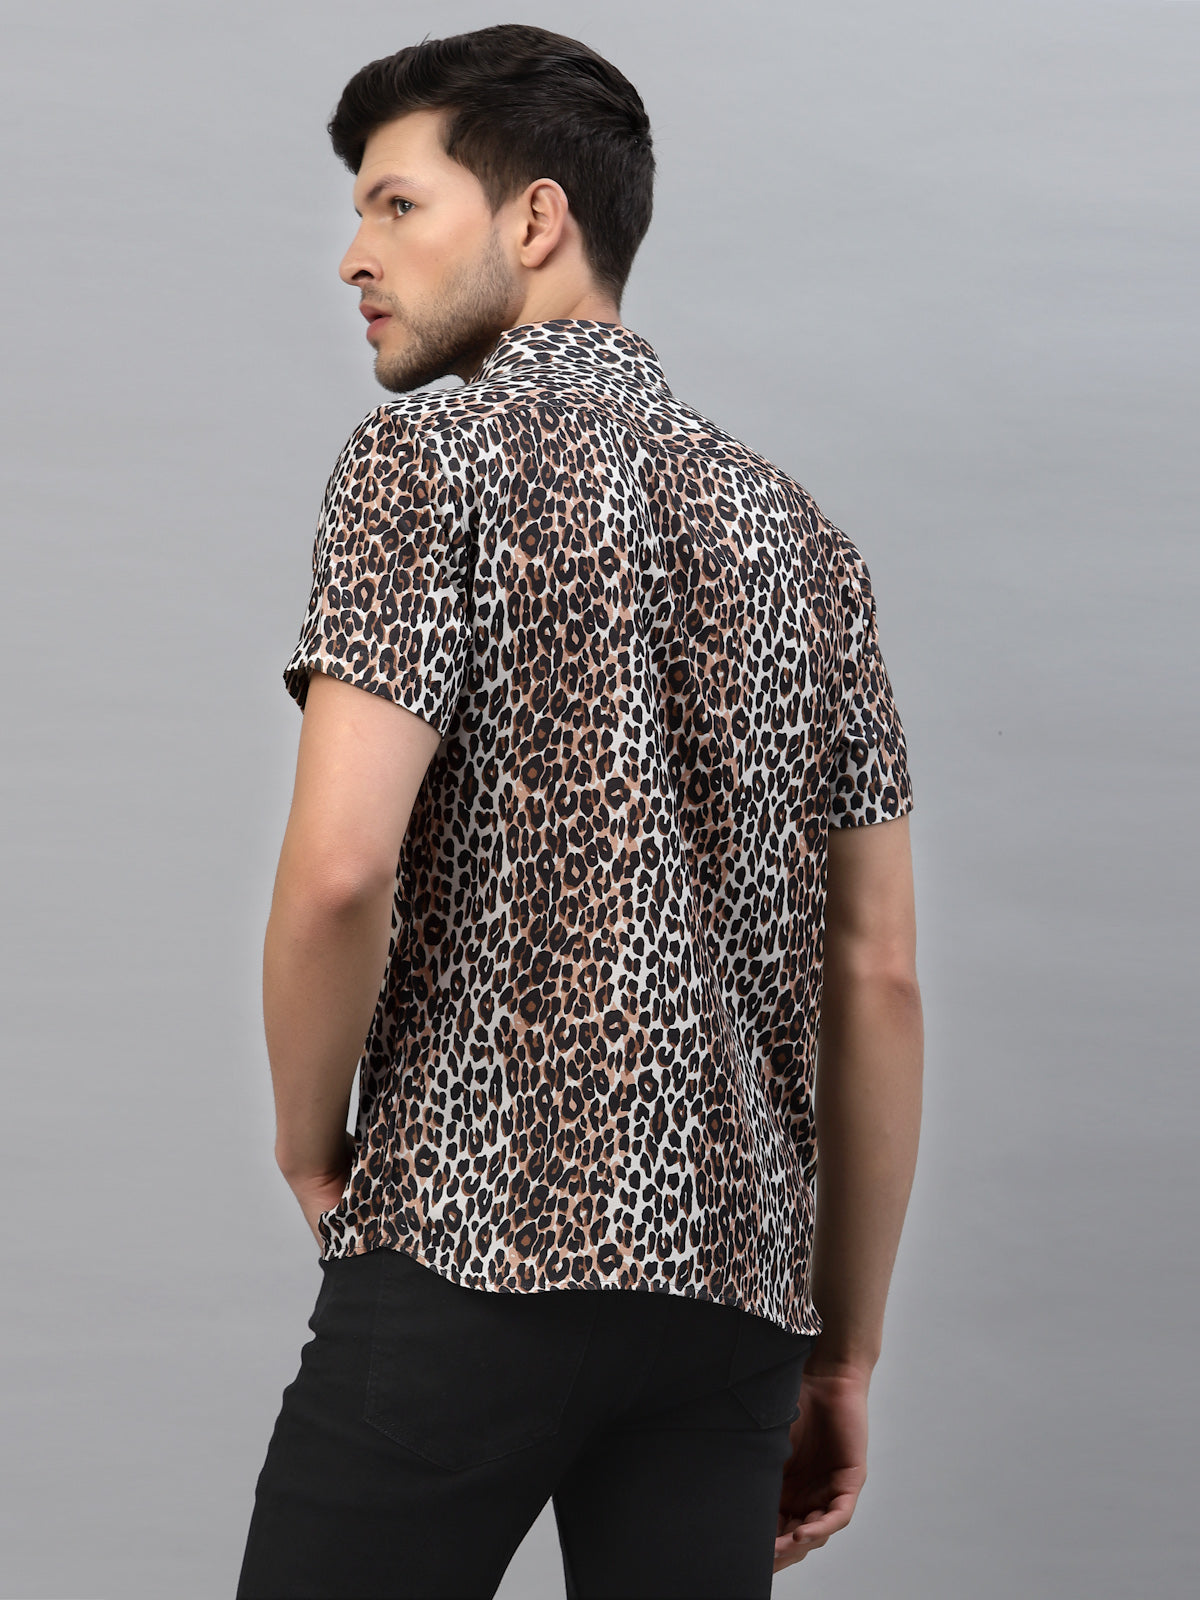 Cheeta Print Half Sleeve Shirt By Gavin Paris